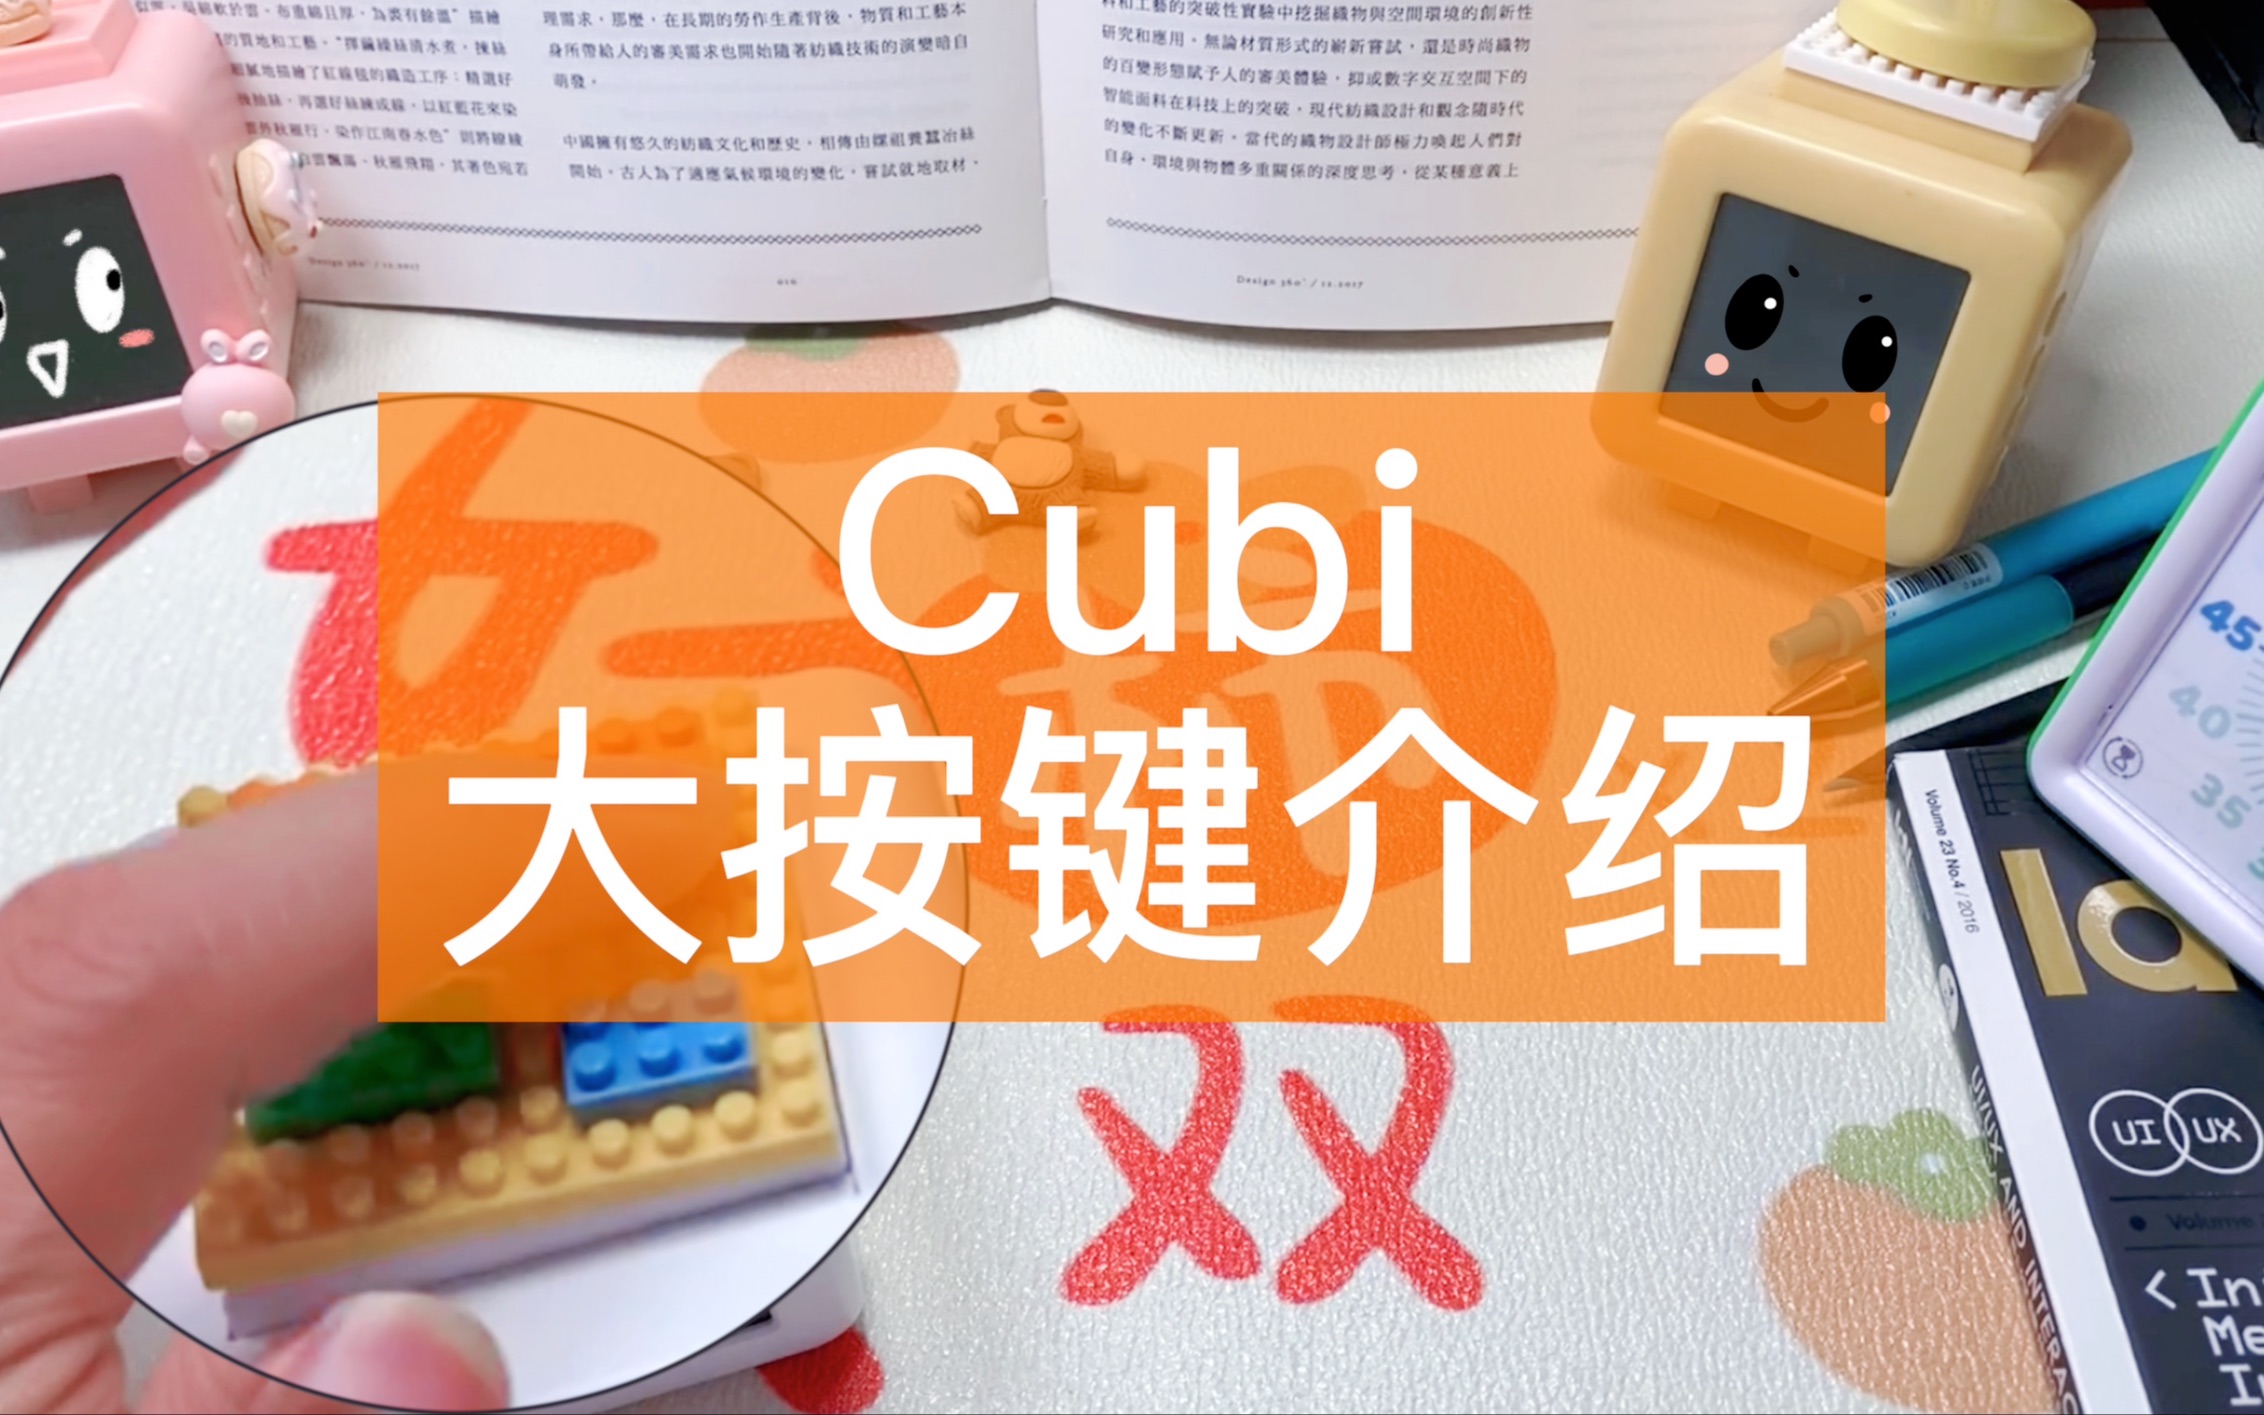 Cubi时间管理器快速上手指南-大按键介绍